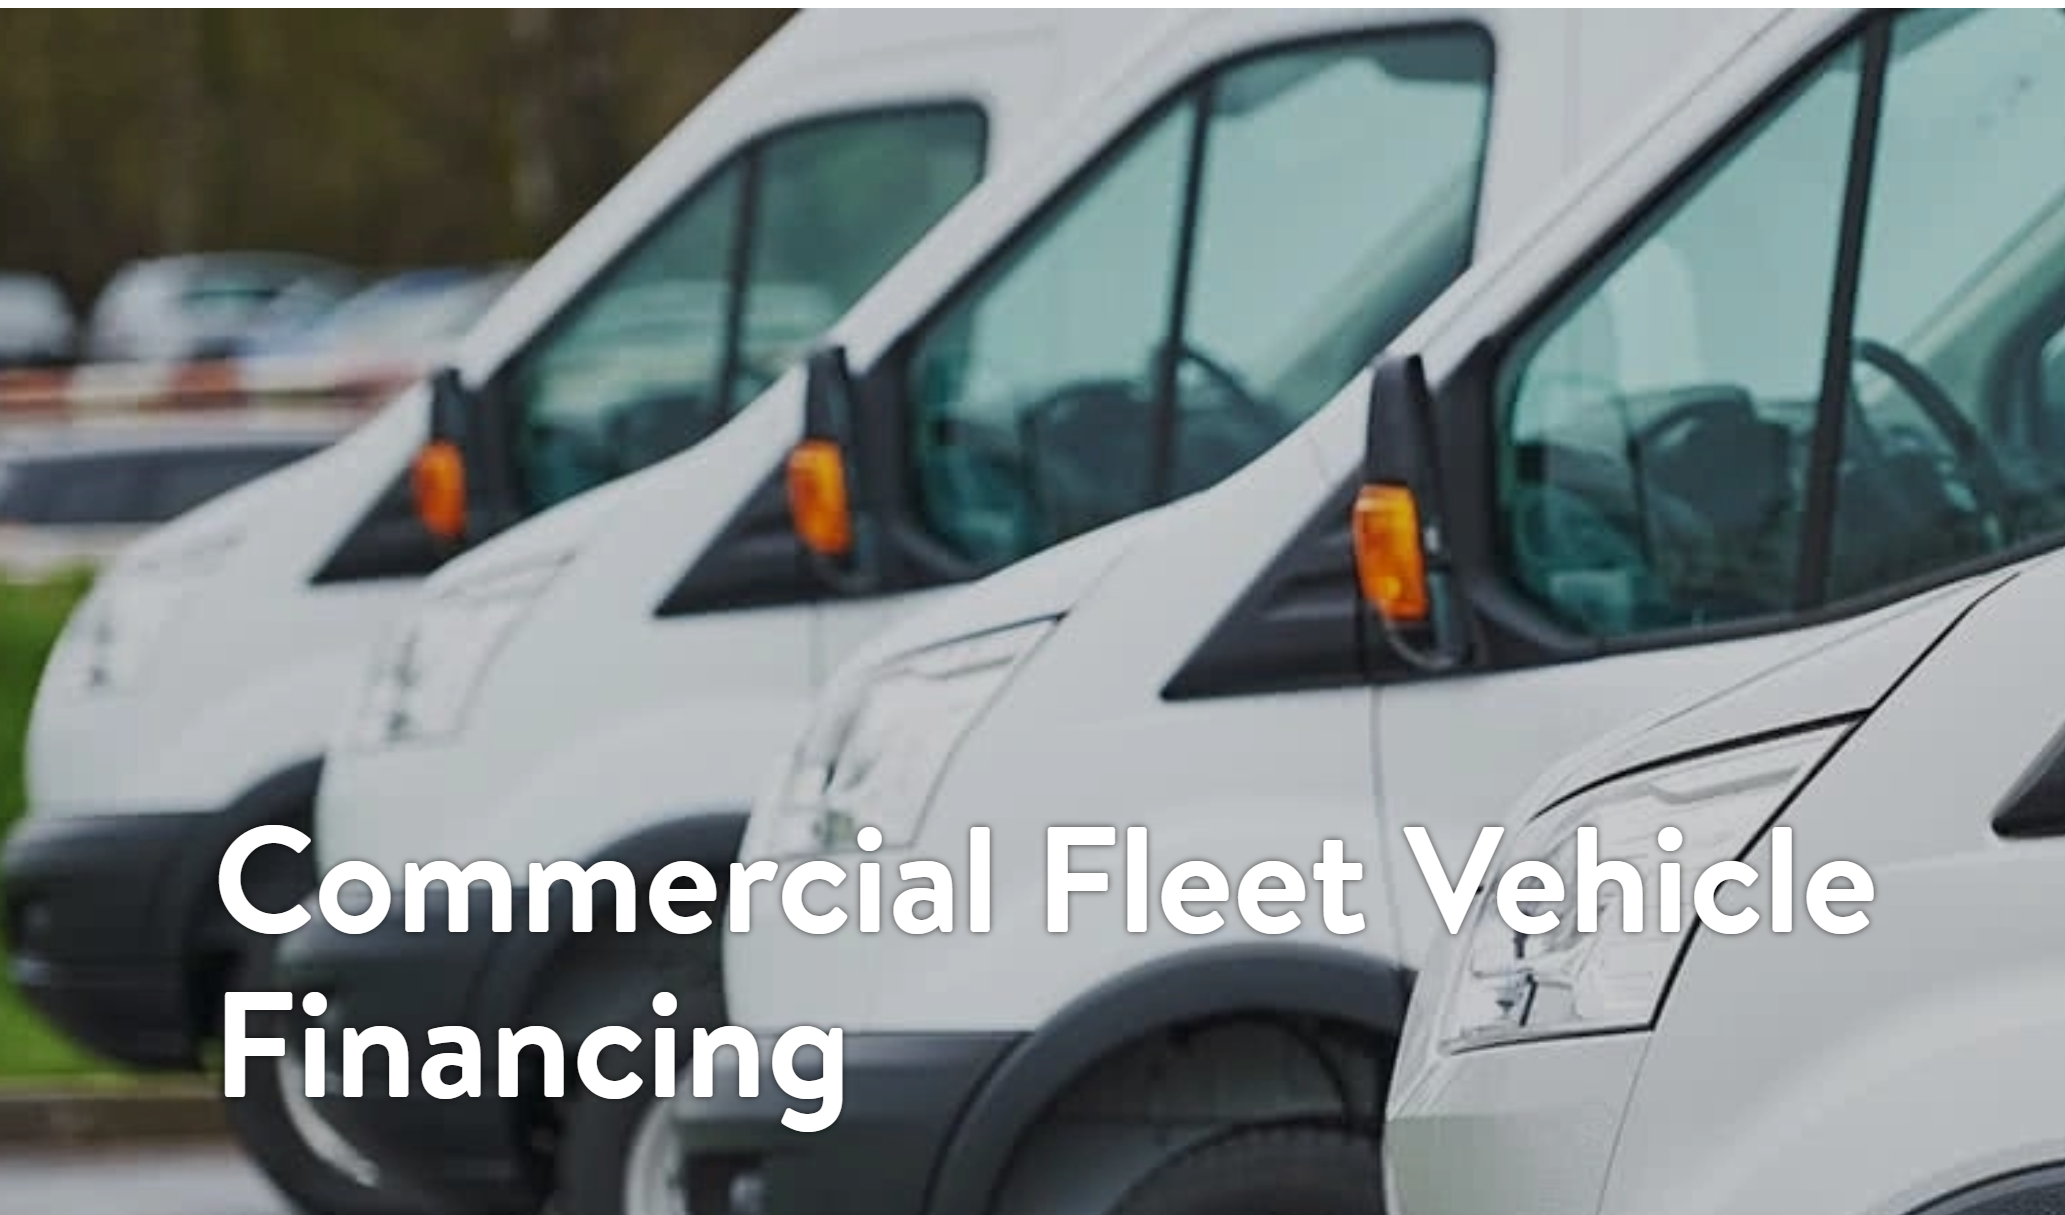 Fleet Financial Auto Finance Solutions - Save Money On Vehicle Loans